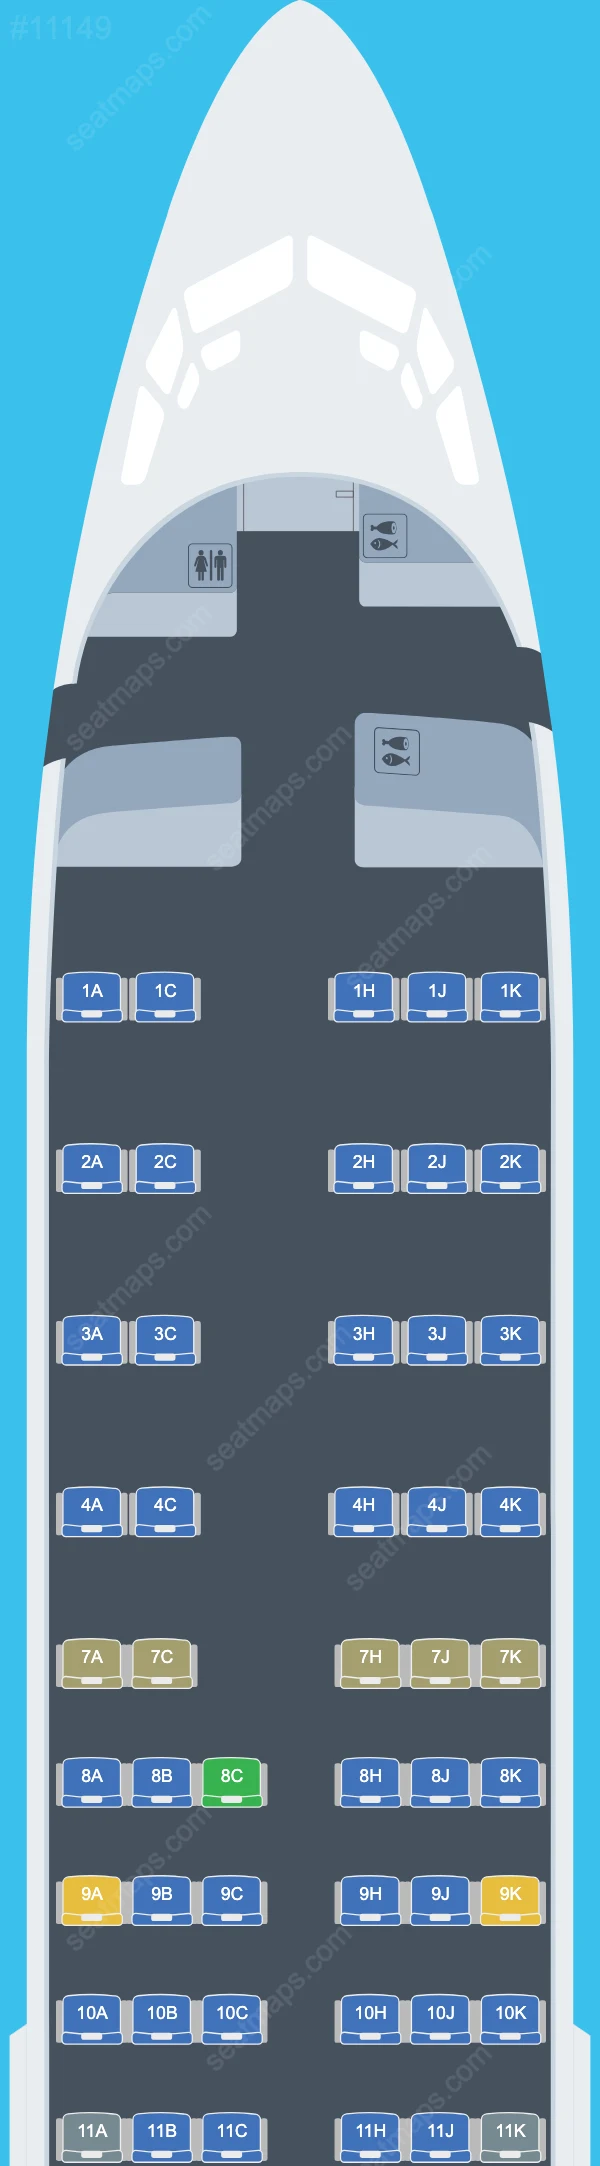 Aeroregional Boeing 737 Seat Maps 737-400